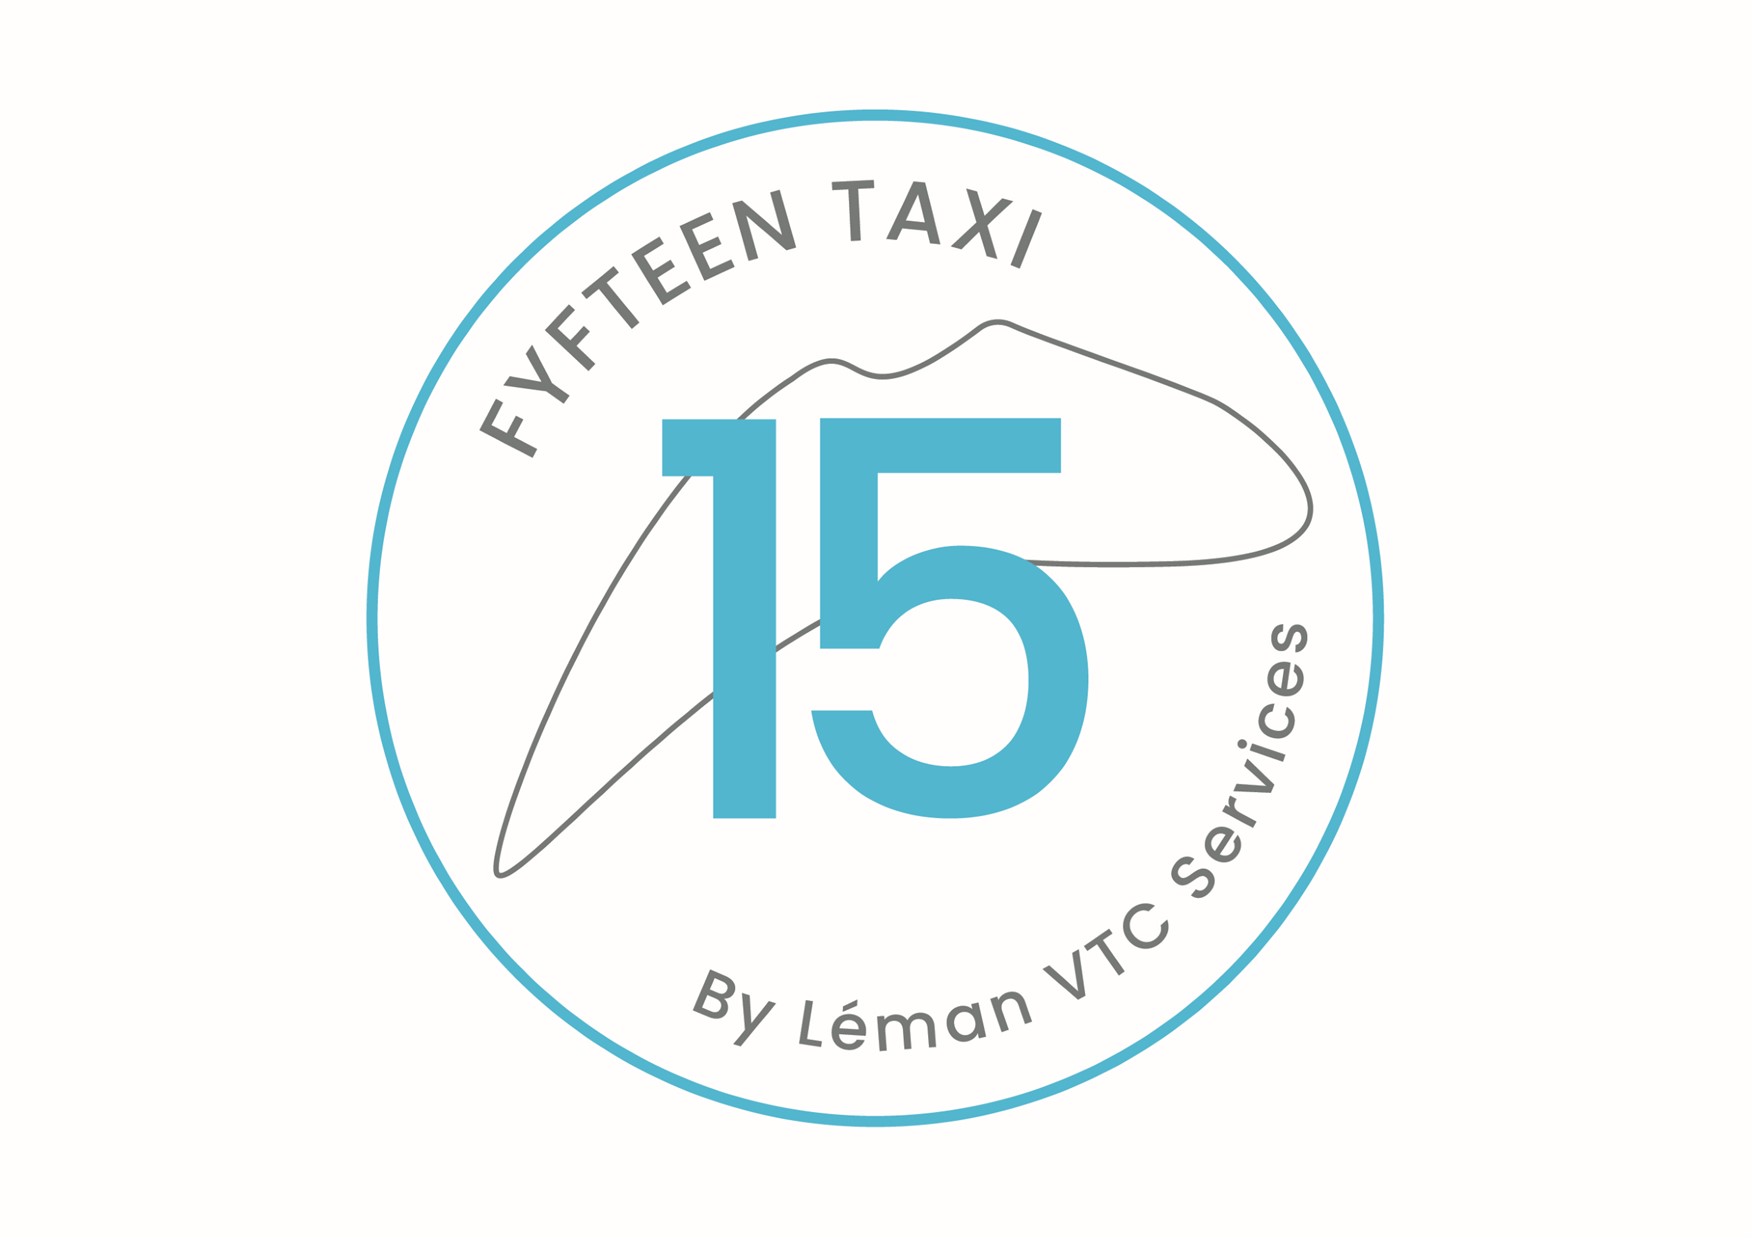 Fyfteen TAXI by Léman VTC Services